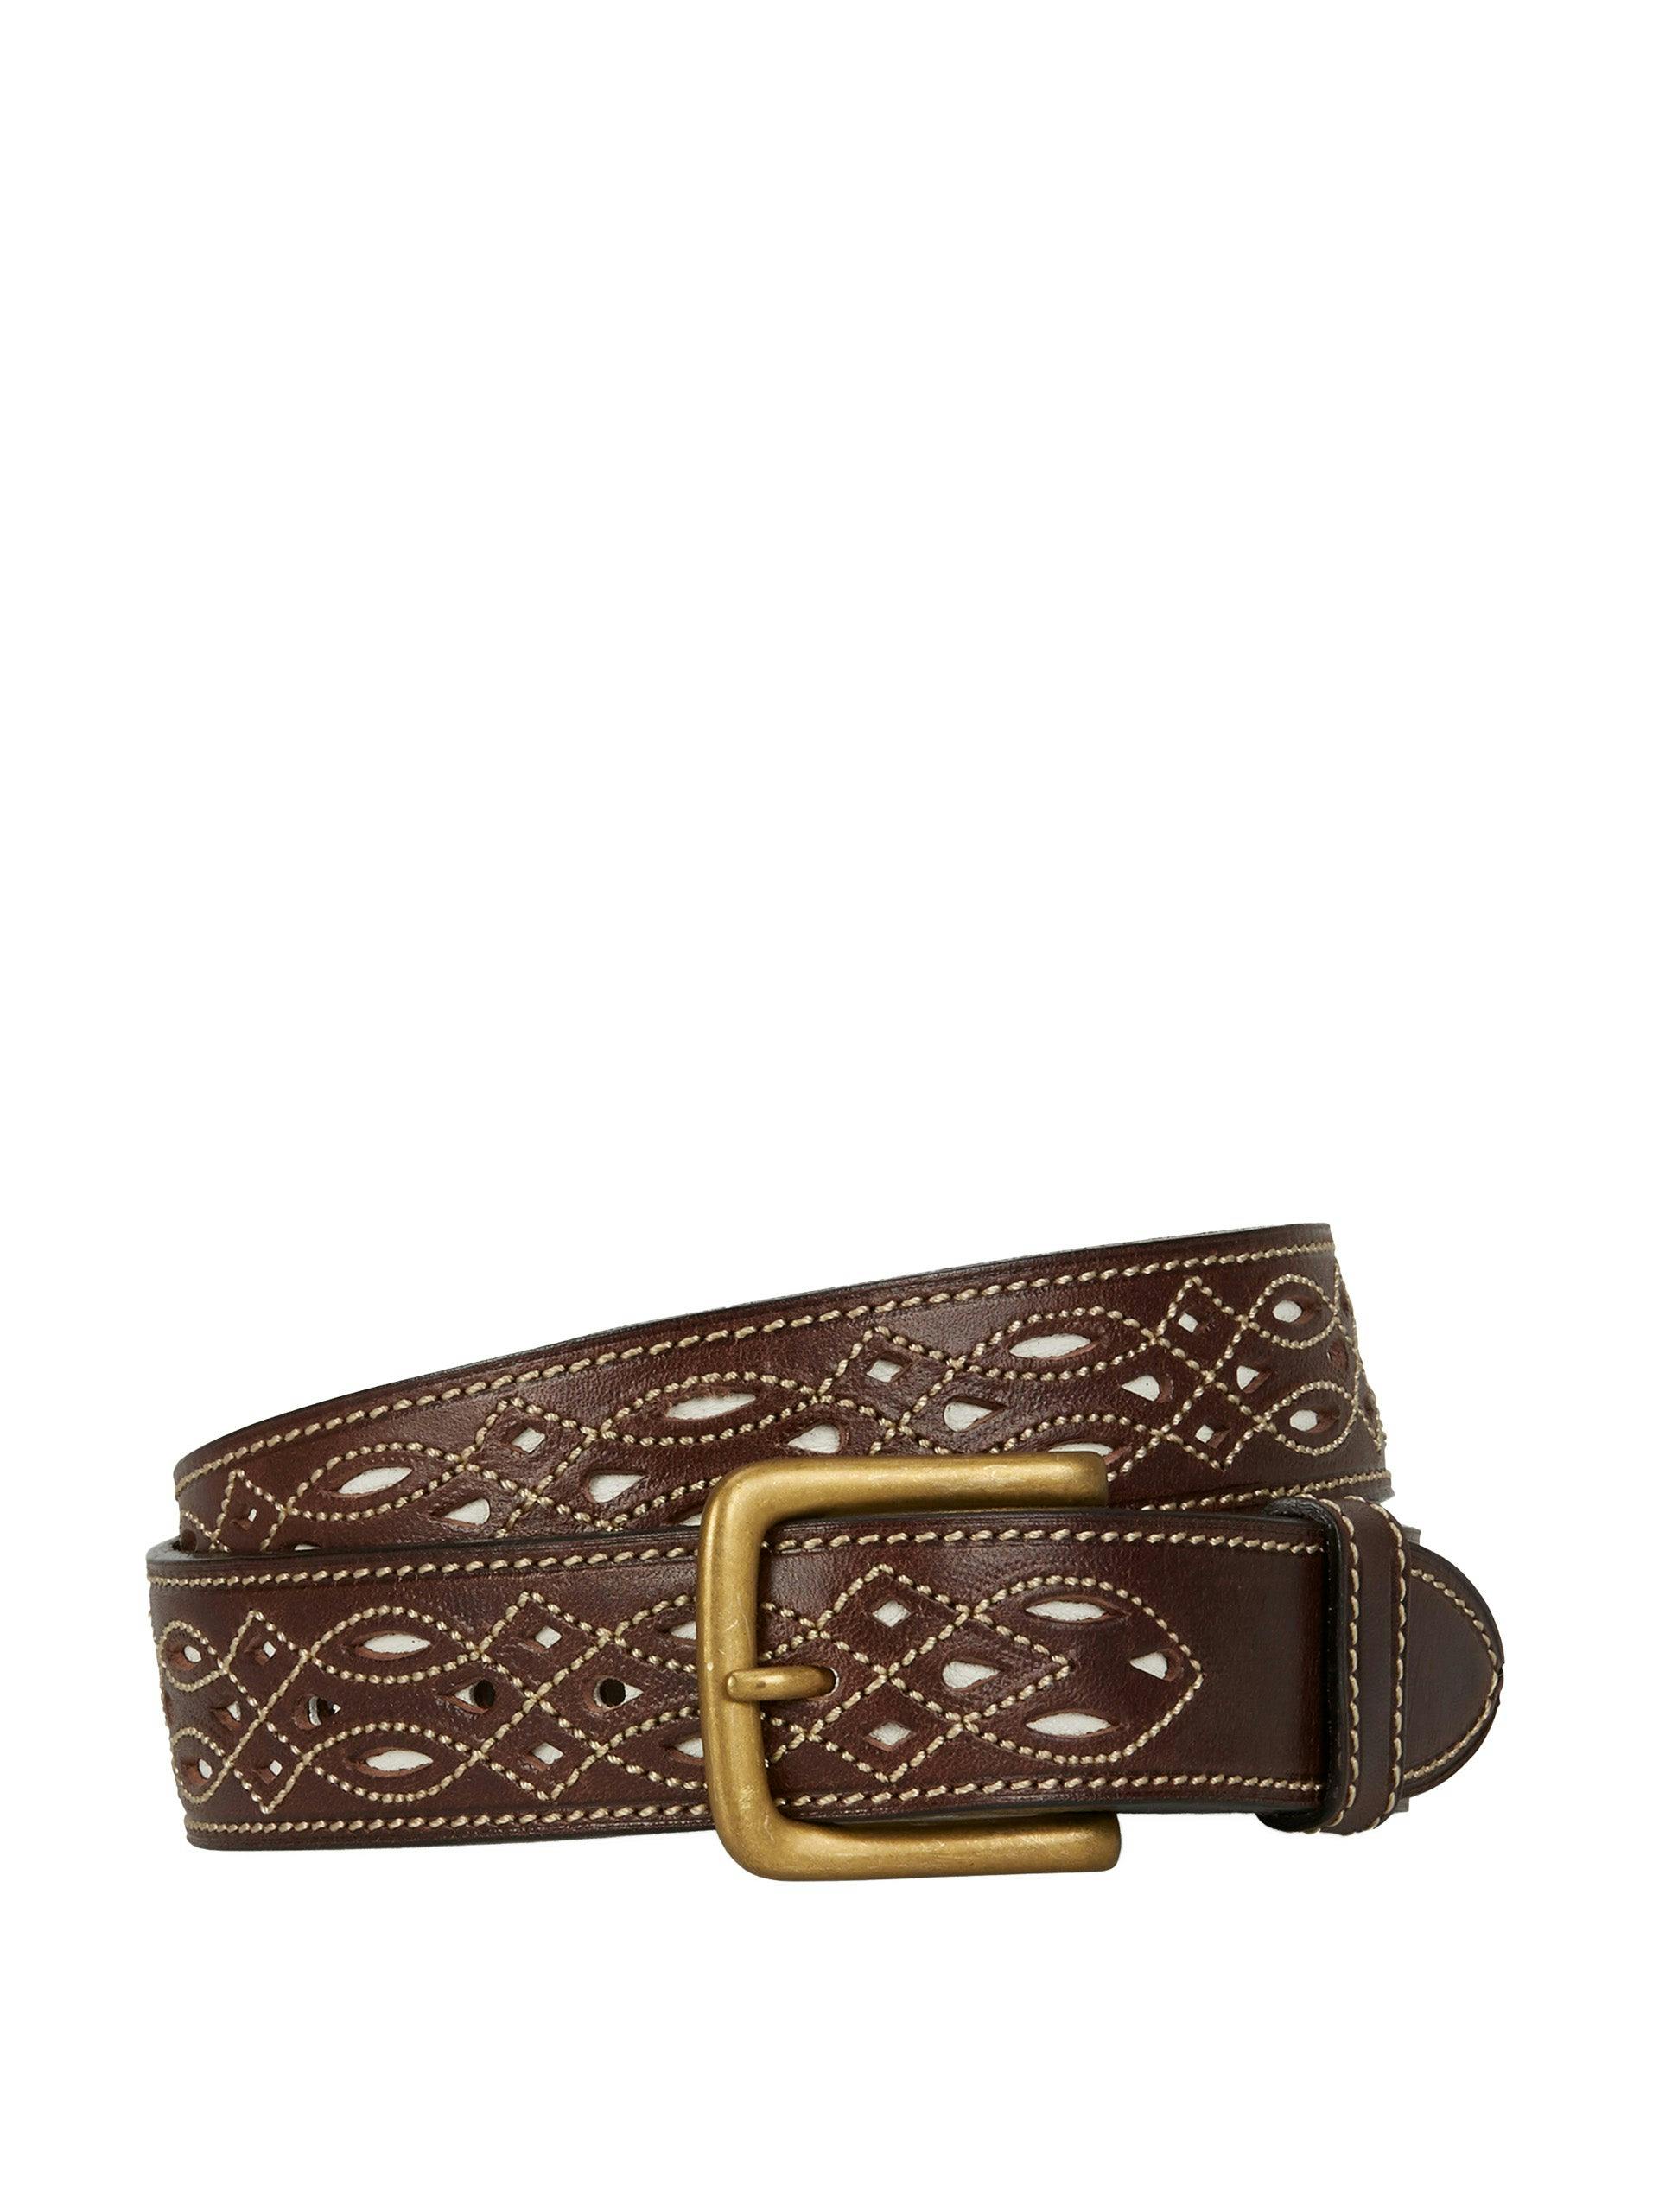 Brown leather belt with white stitchwork